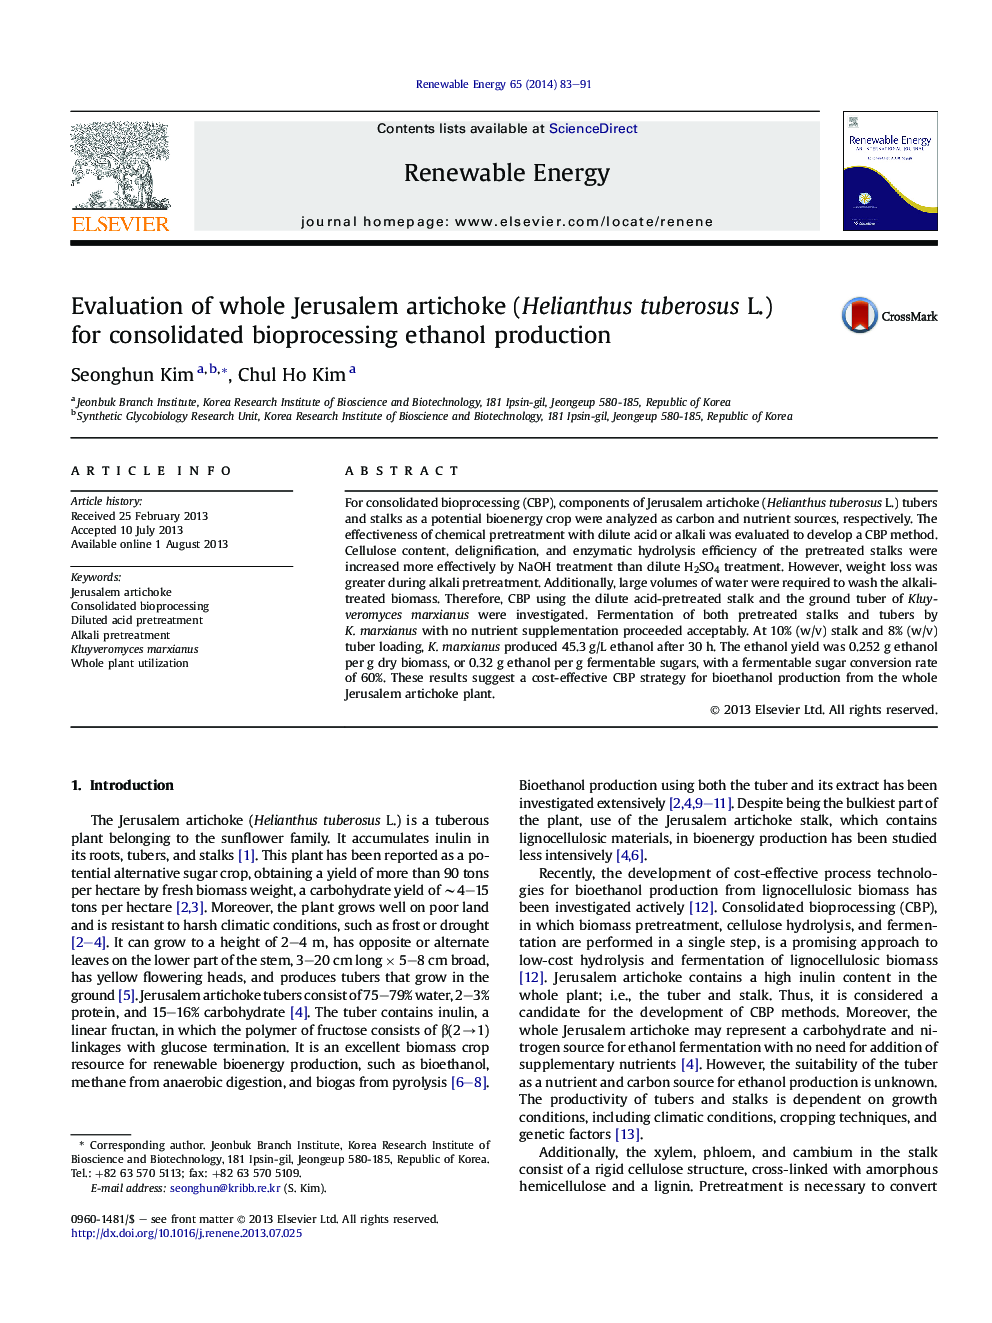 Evaluation of whole Jerusalem artichoke (Helianthus tuberosus L.) for consolidated bioprocessing ethanol production